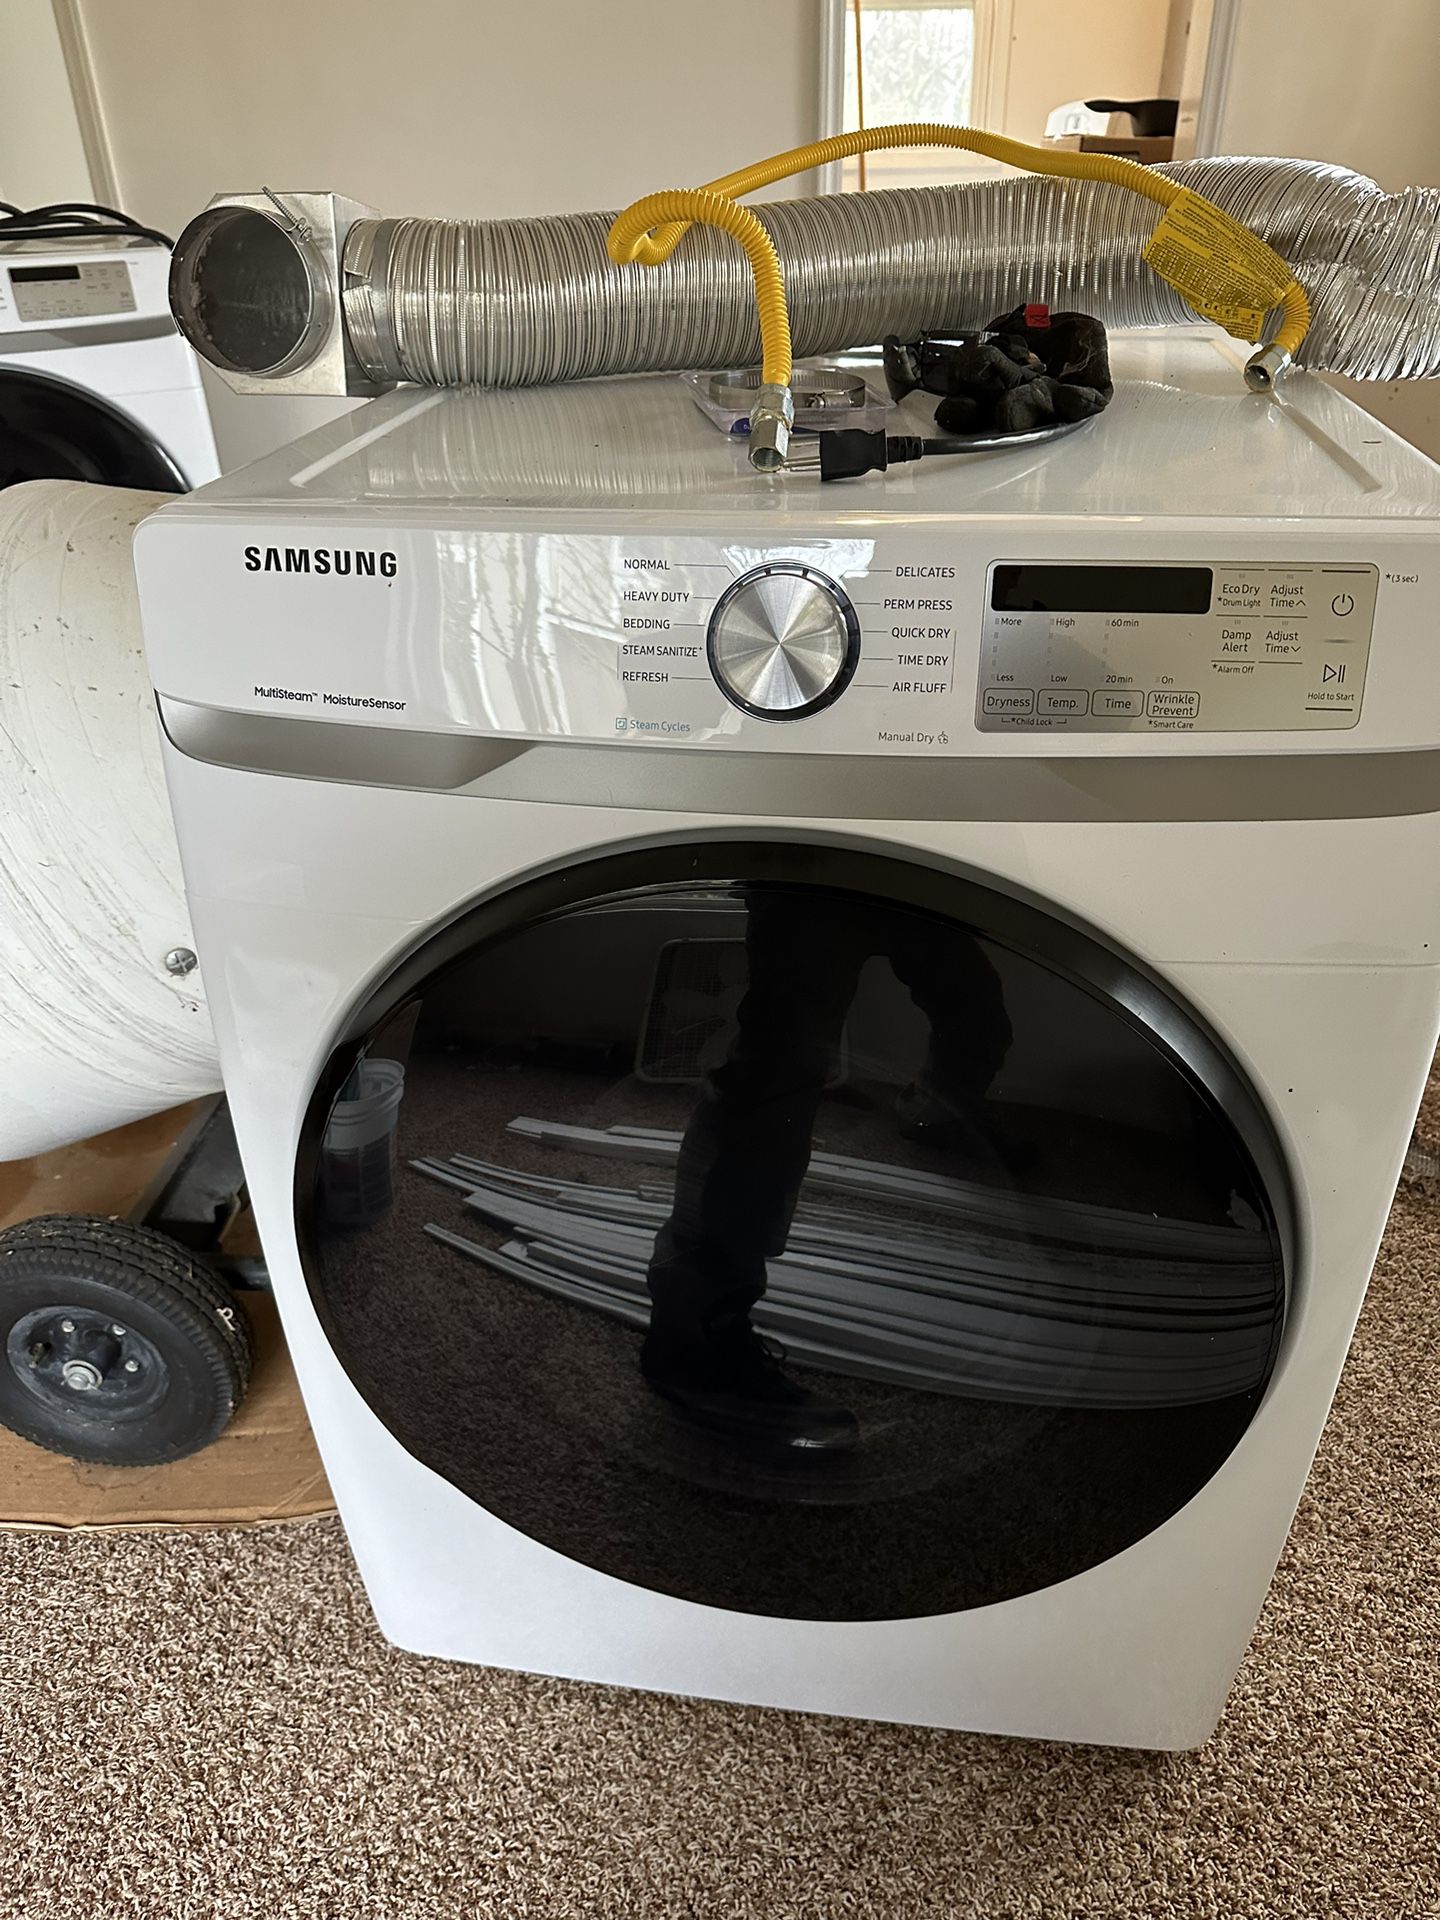 SAMSUNG (Gas) Washer and Dryer Set